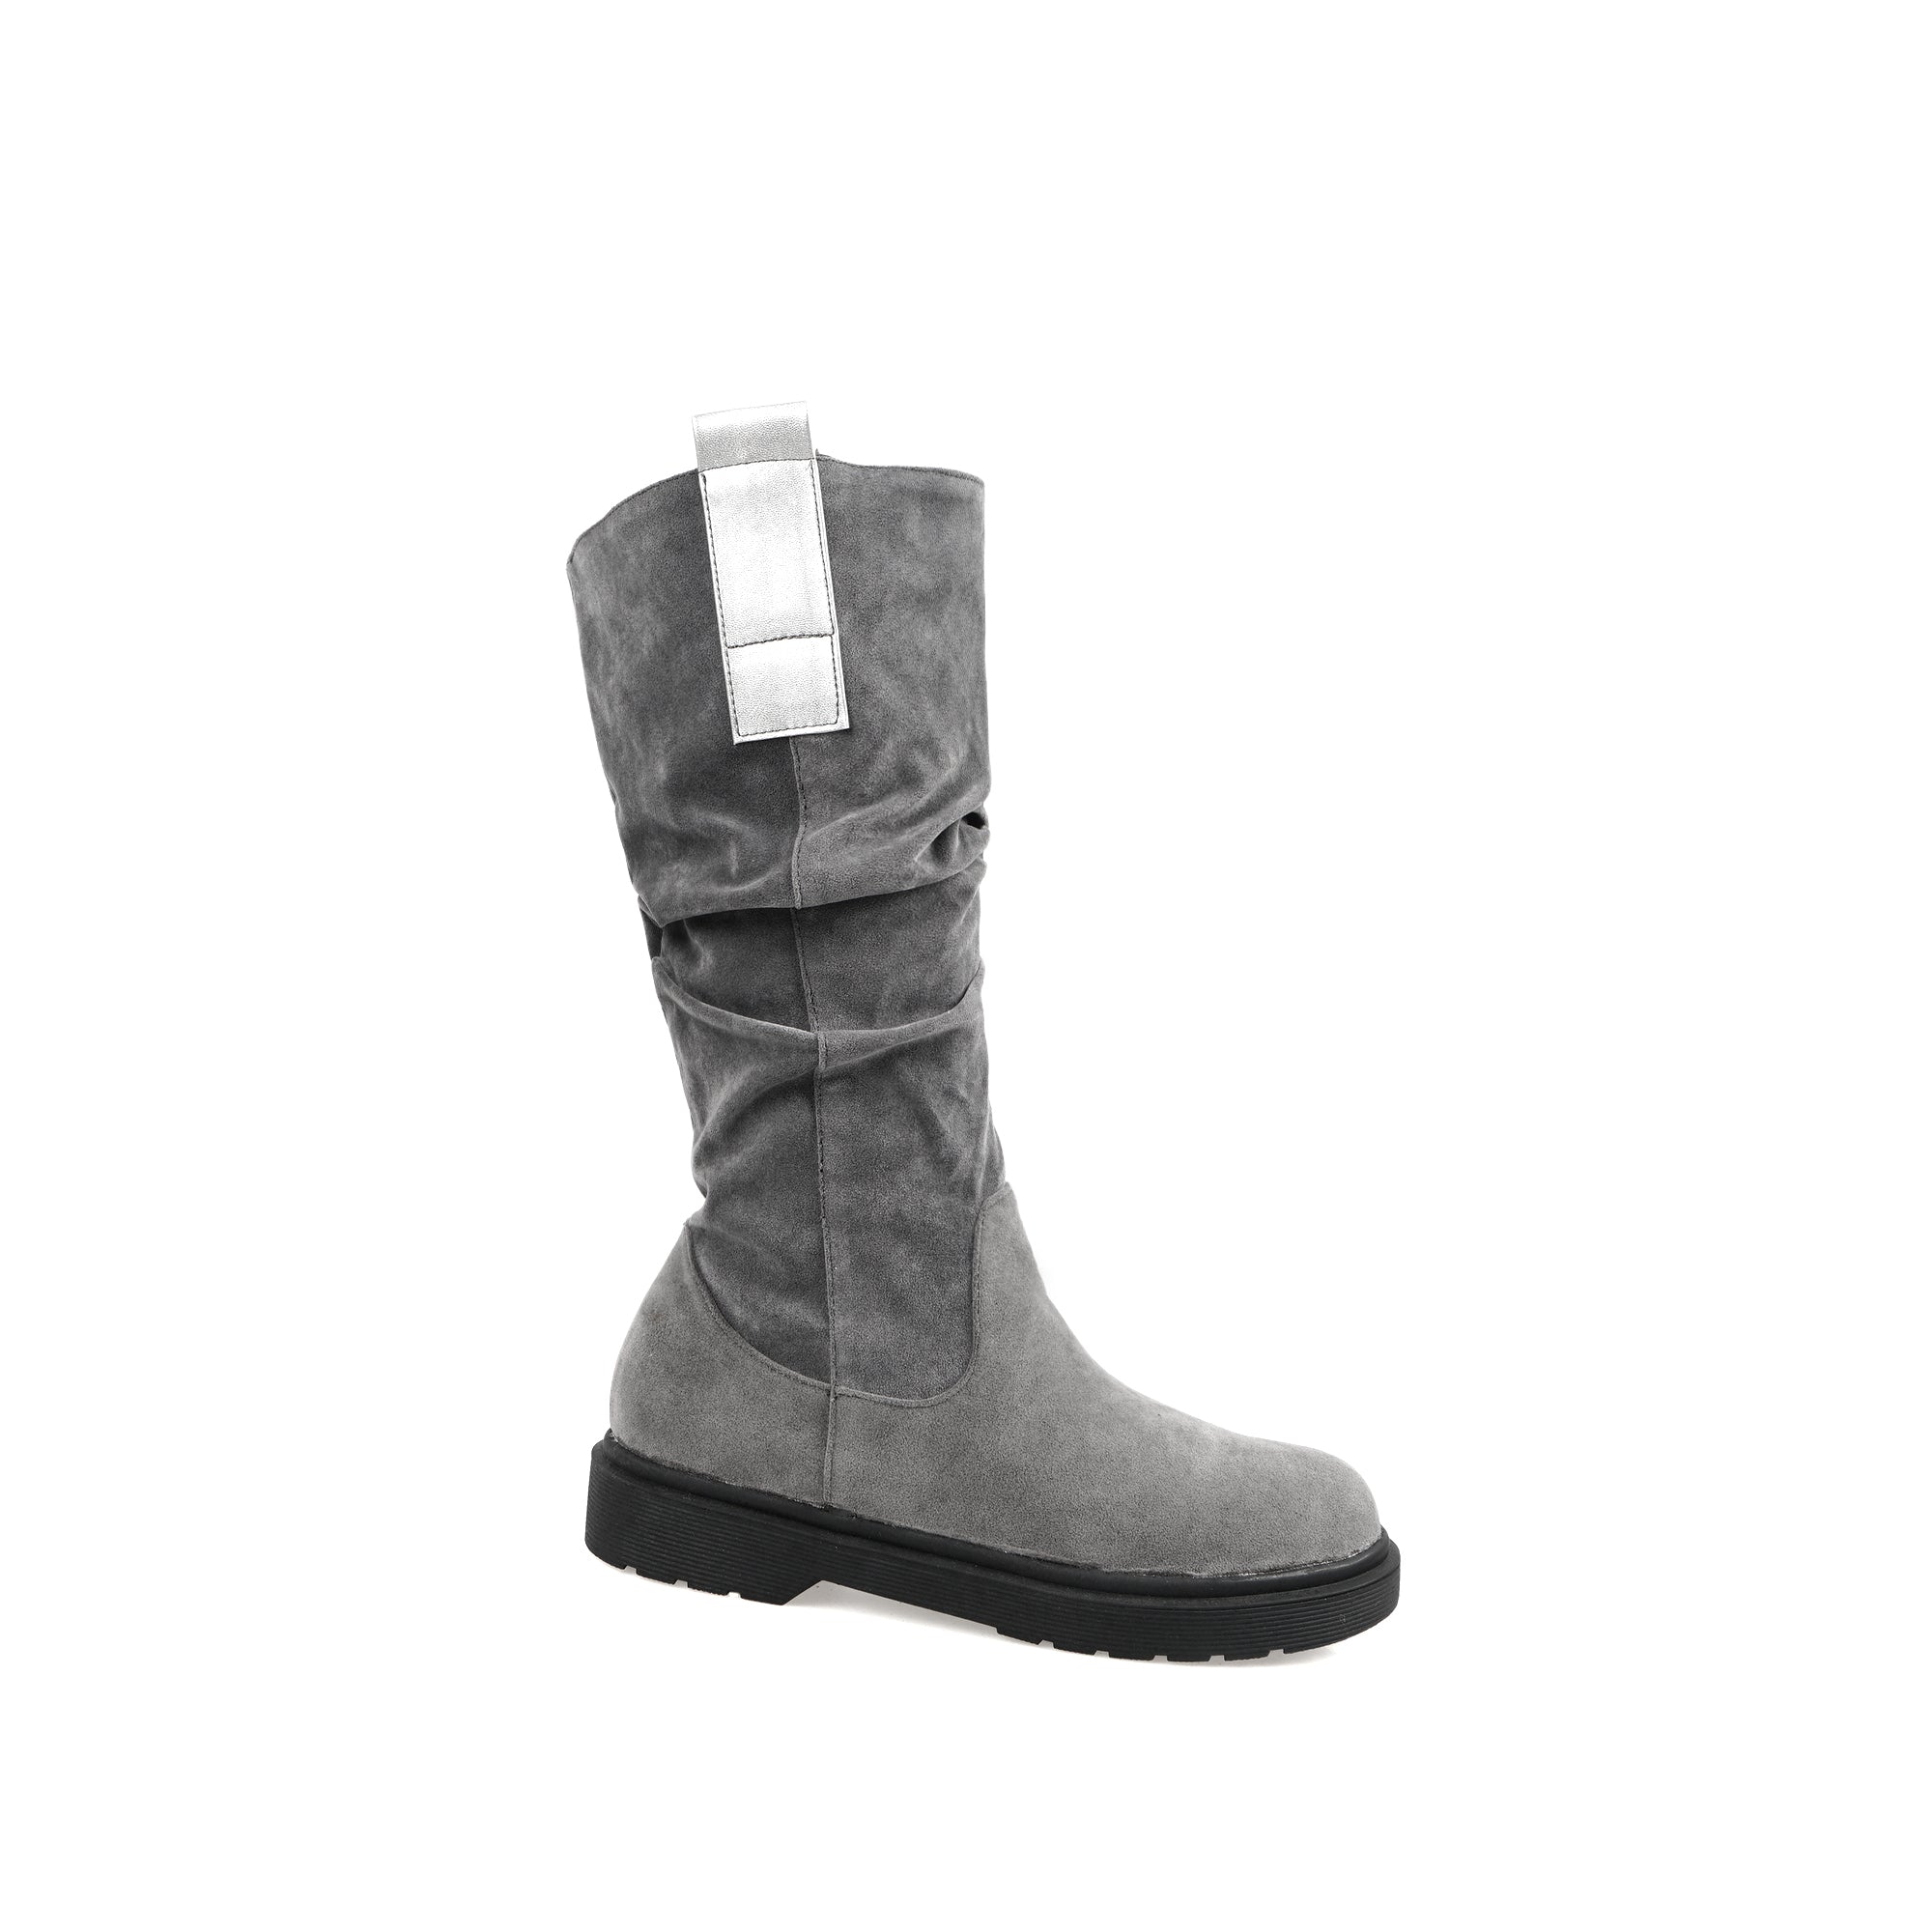 Bigsizeheels Suede warm flat snow boots - Gray freeshipping - bigsizeheel®-size5-size15 -All Plus Sizes Available!